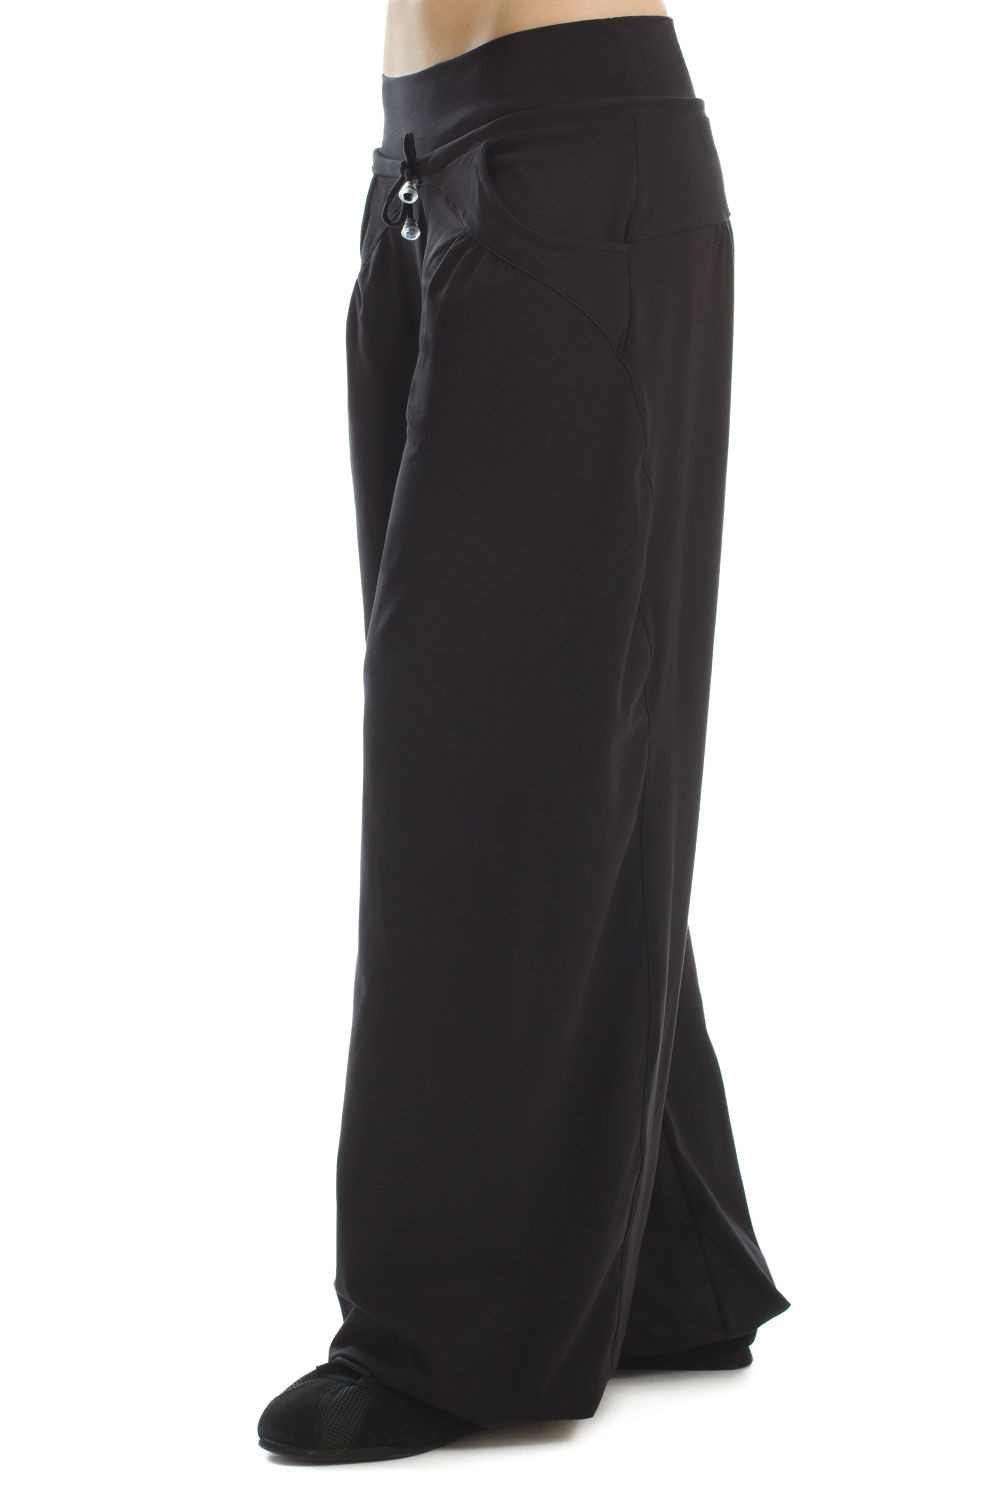 Baggy Trousers - Dance Black, WTE3 Style Winshape